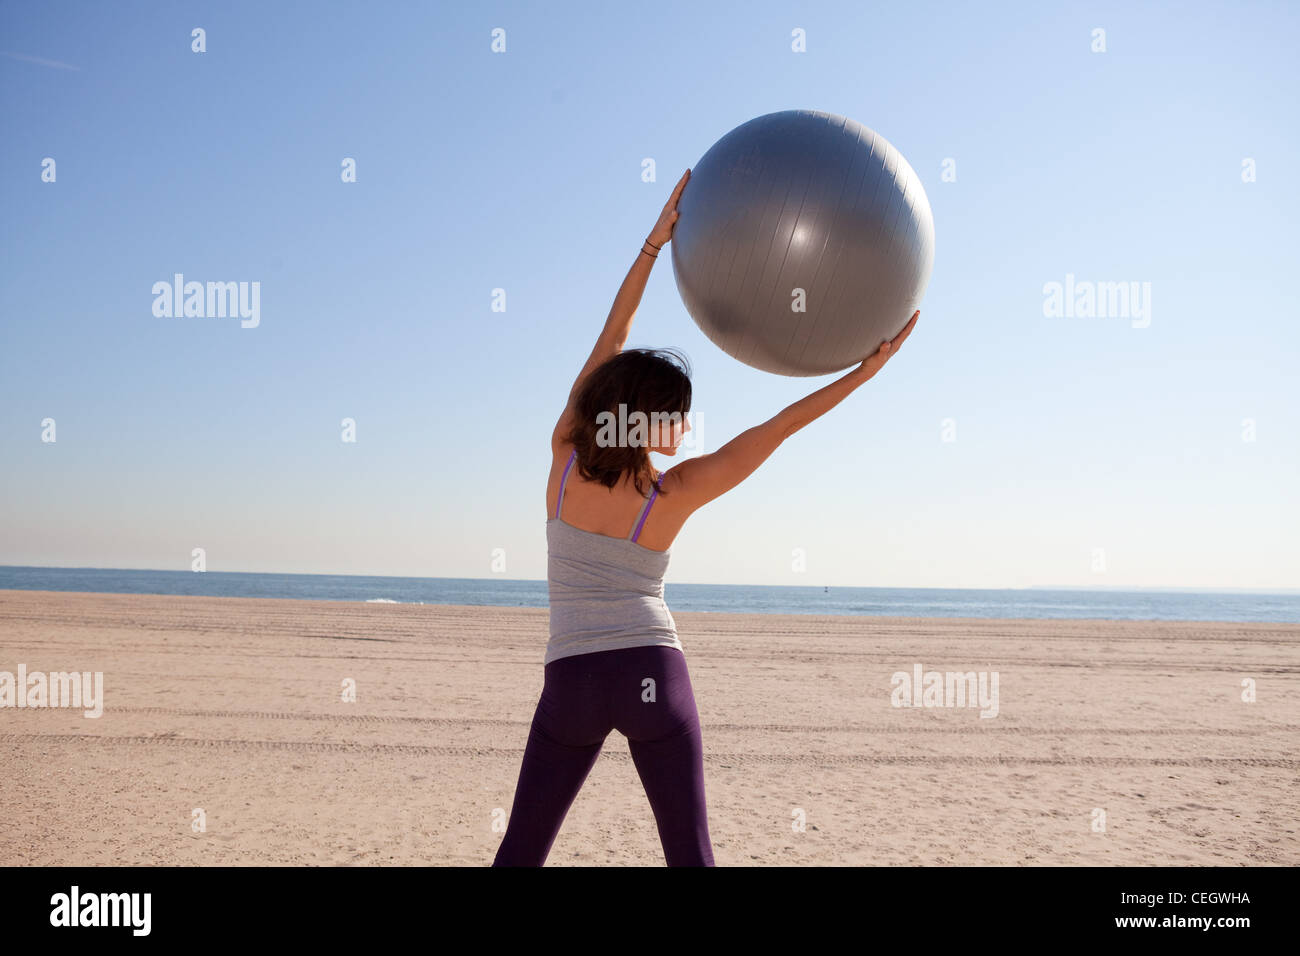 Woman on beach using exercise ball Stock Photo